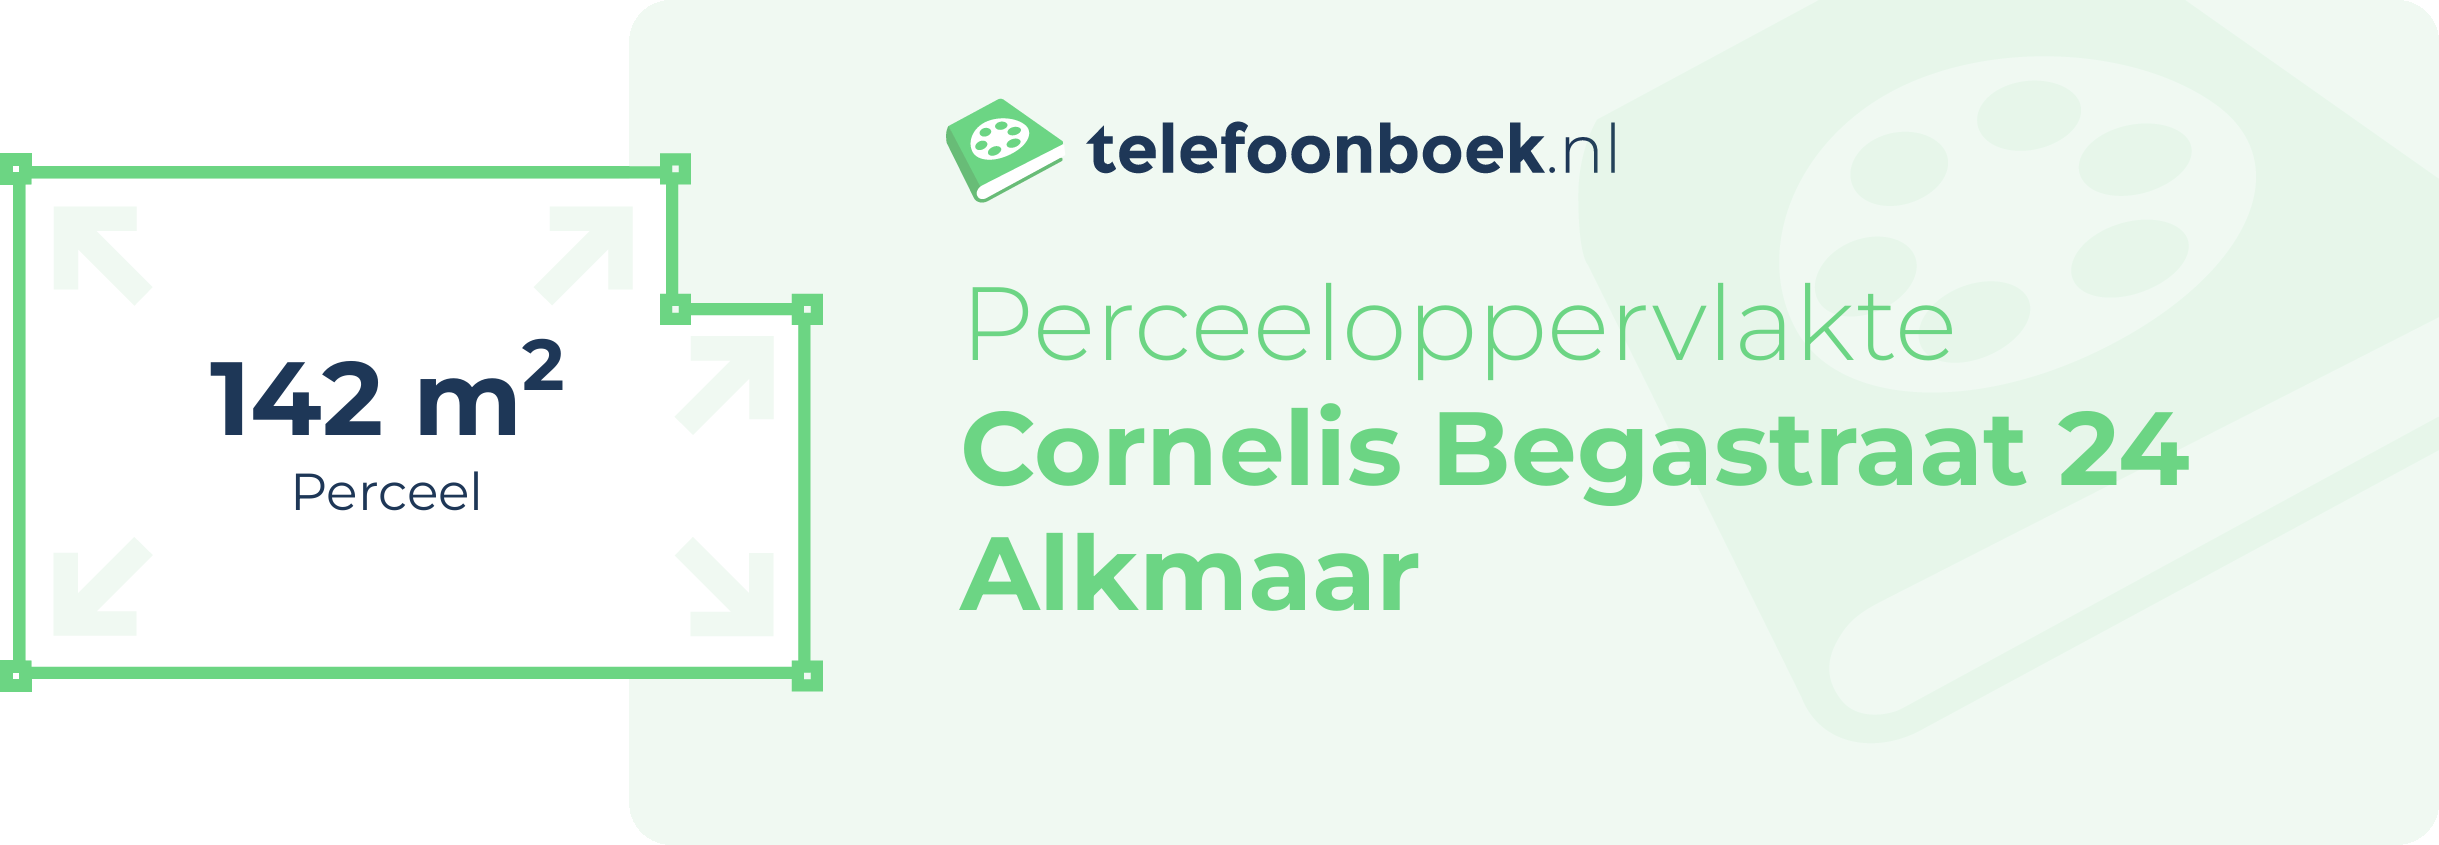 Perceeloppervlakte Cornelis Begastraat 24 Alkmaar